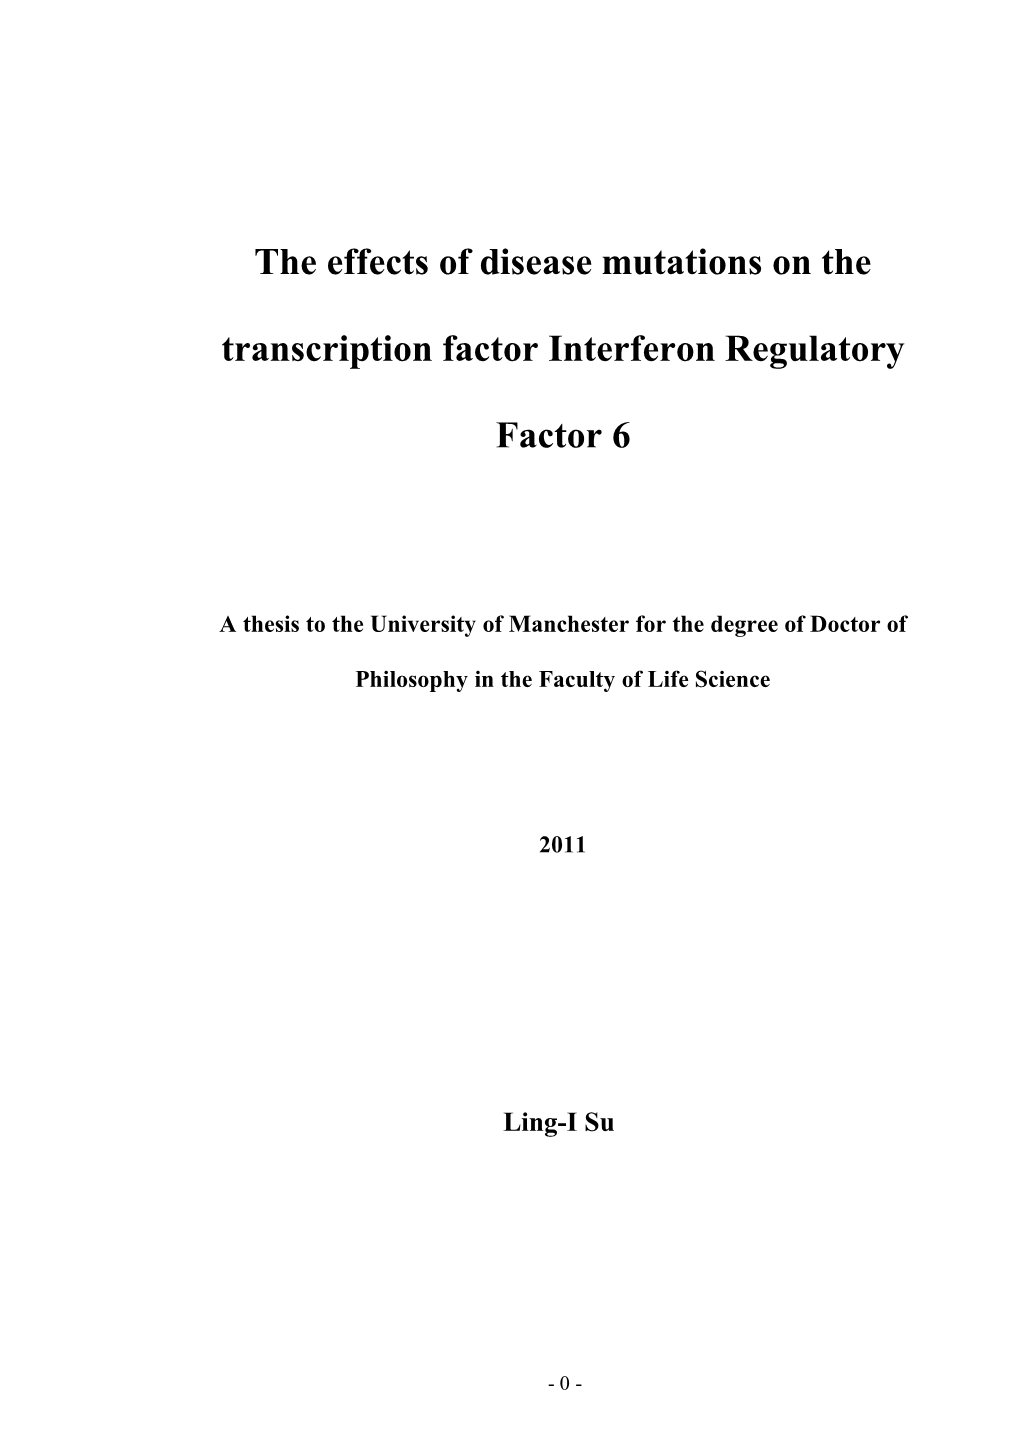 The Effects of Disease Mutations on the Transcription Factor Interferon Regulatory Factor 6 June 2011